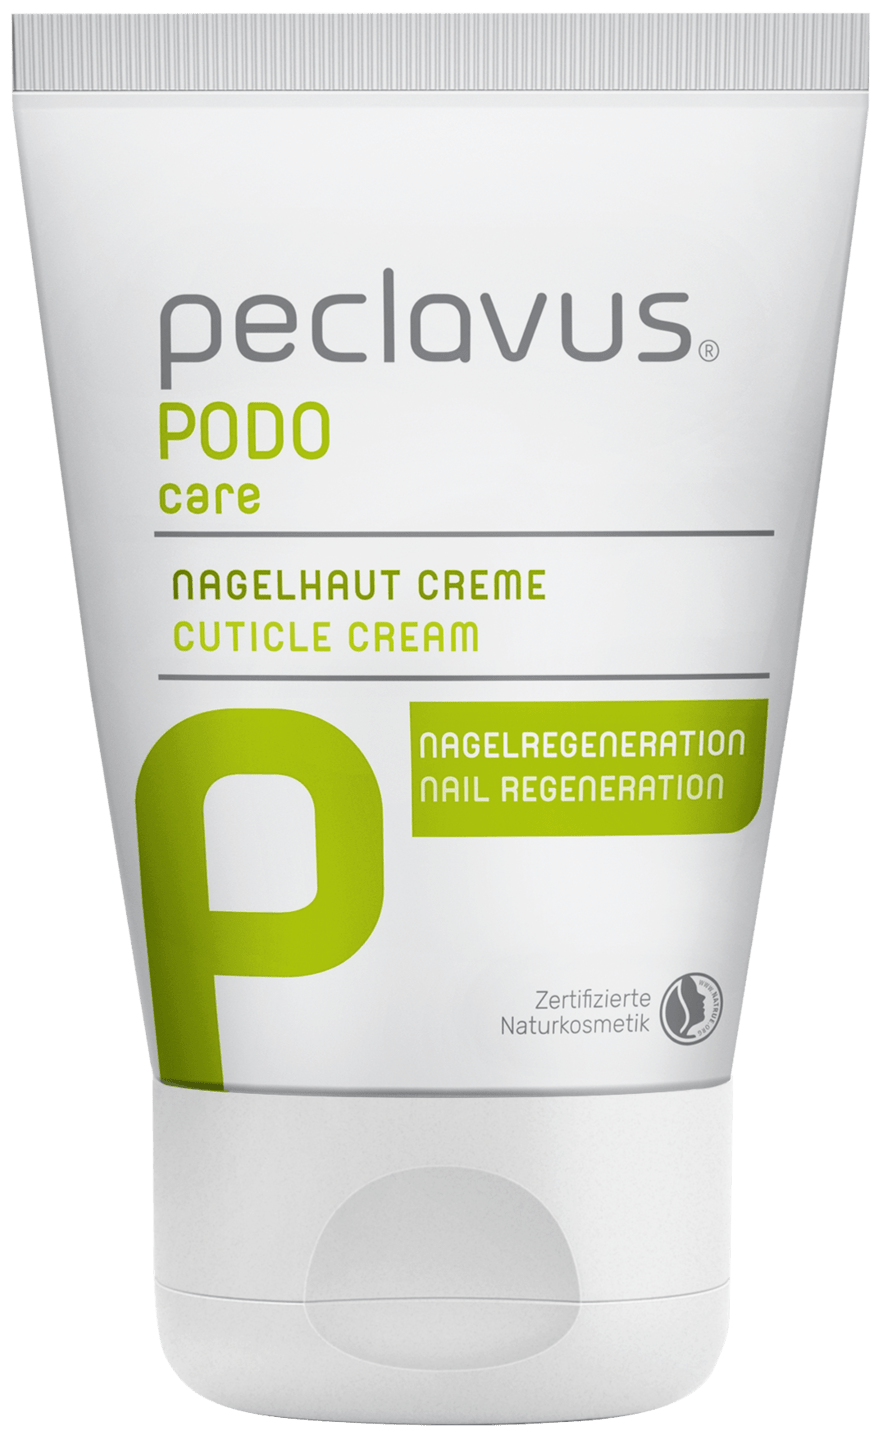 peclavus - Nagelhaut Creme